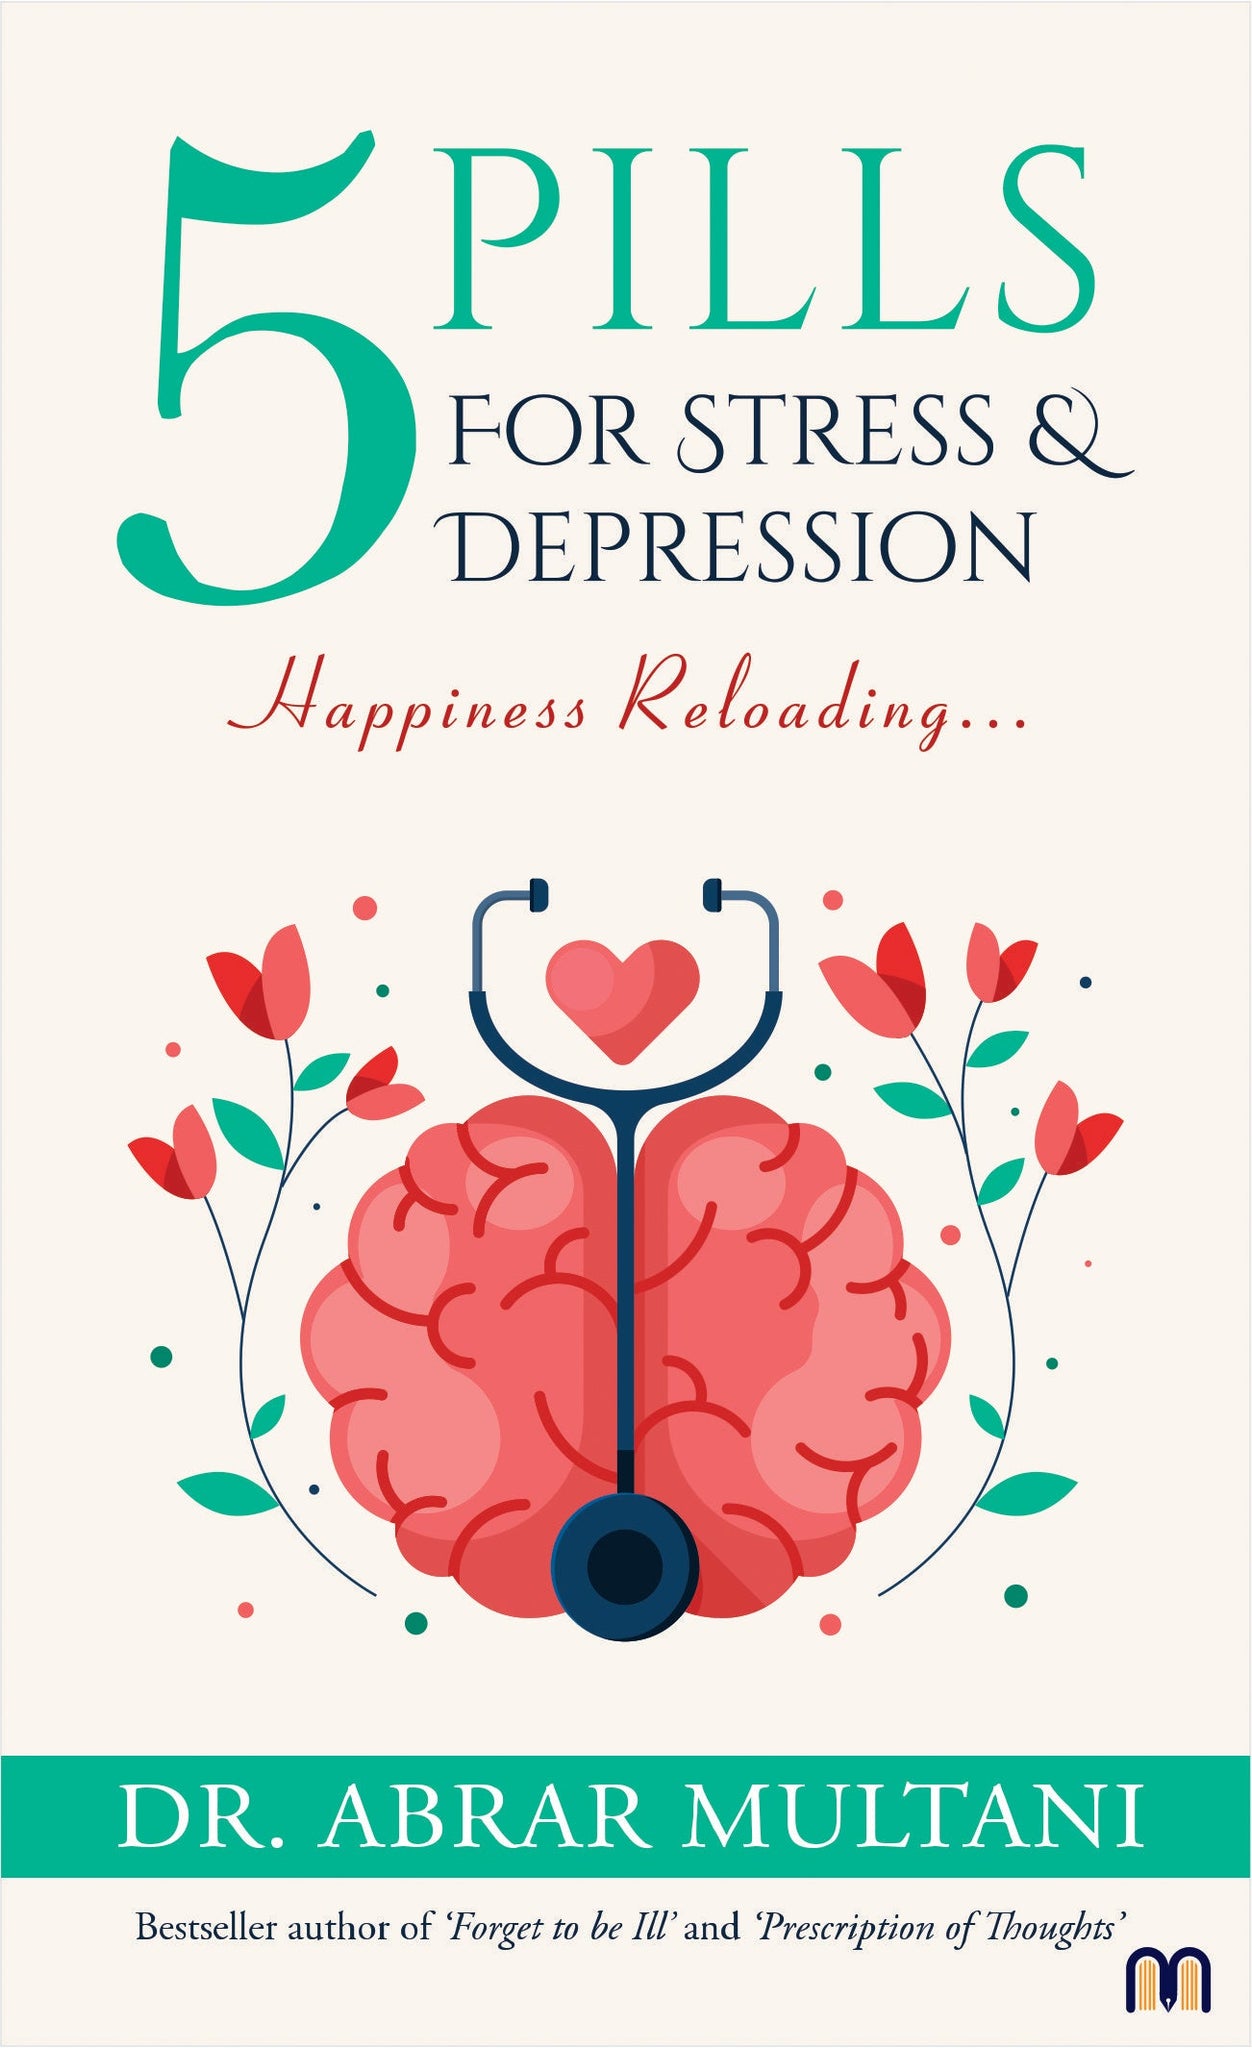 5PILLS FOR DEPRESSION & STRESS